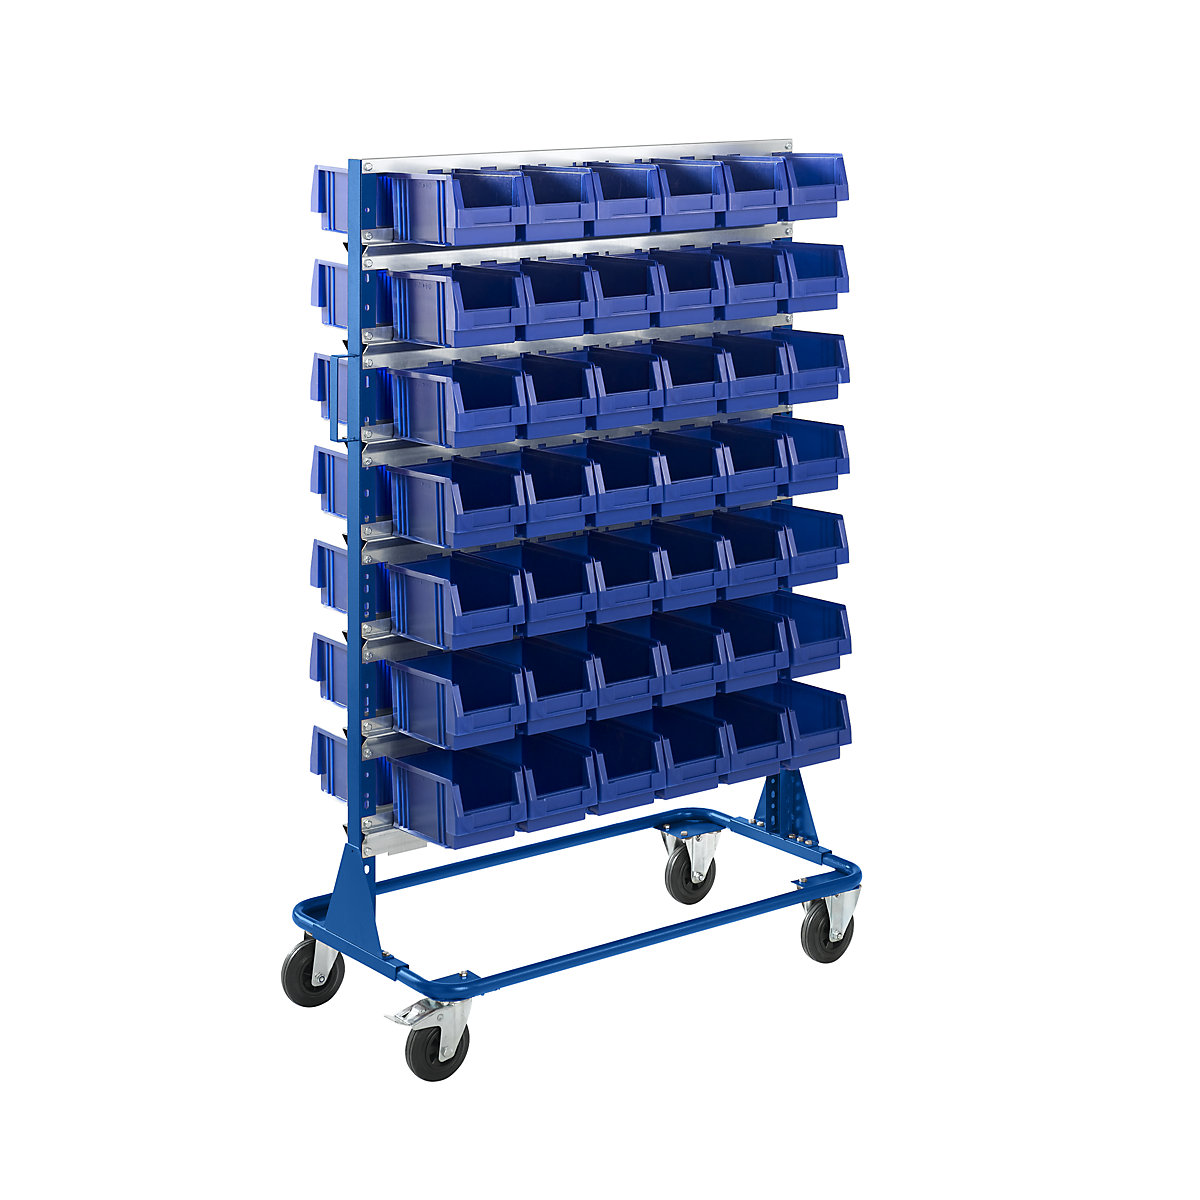 Pokretni regal, visina 1588 mm, pokretni regal s 84 otvorene skladišne kutije, u encijan plavoj boji-6